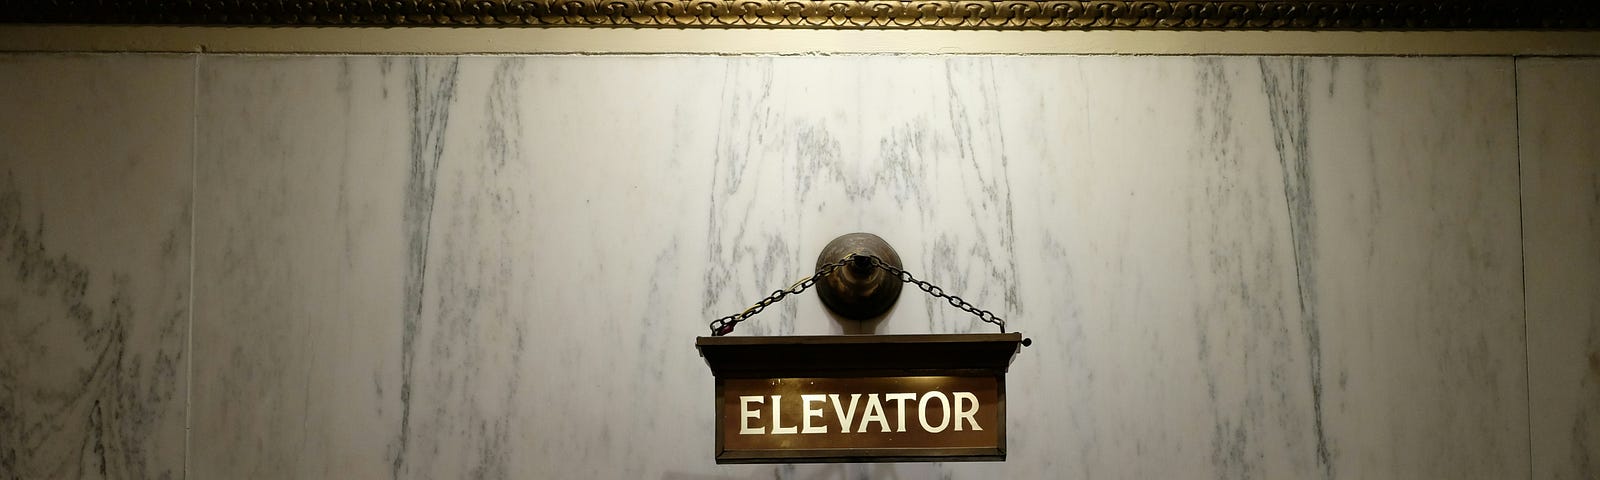 Photo of an elevator with a single dim light overhead.